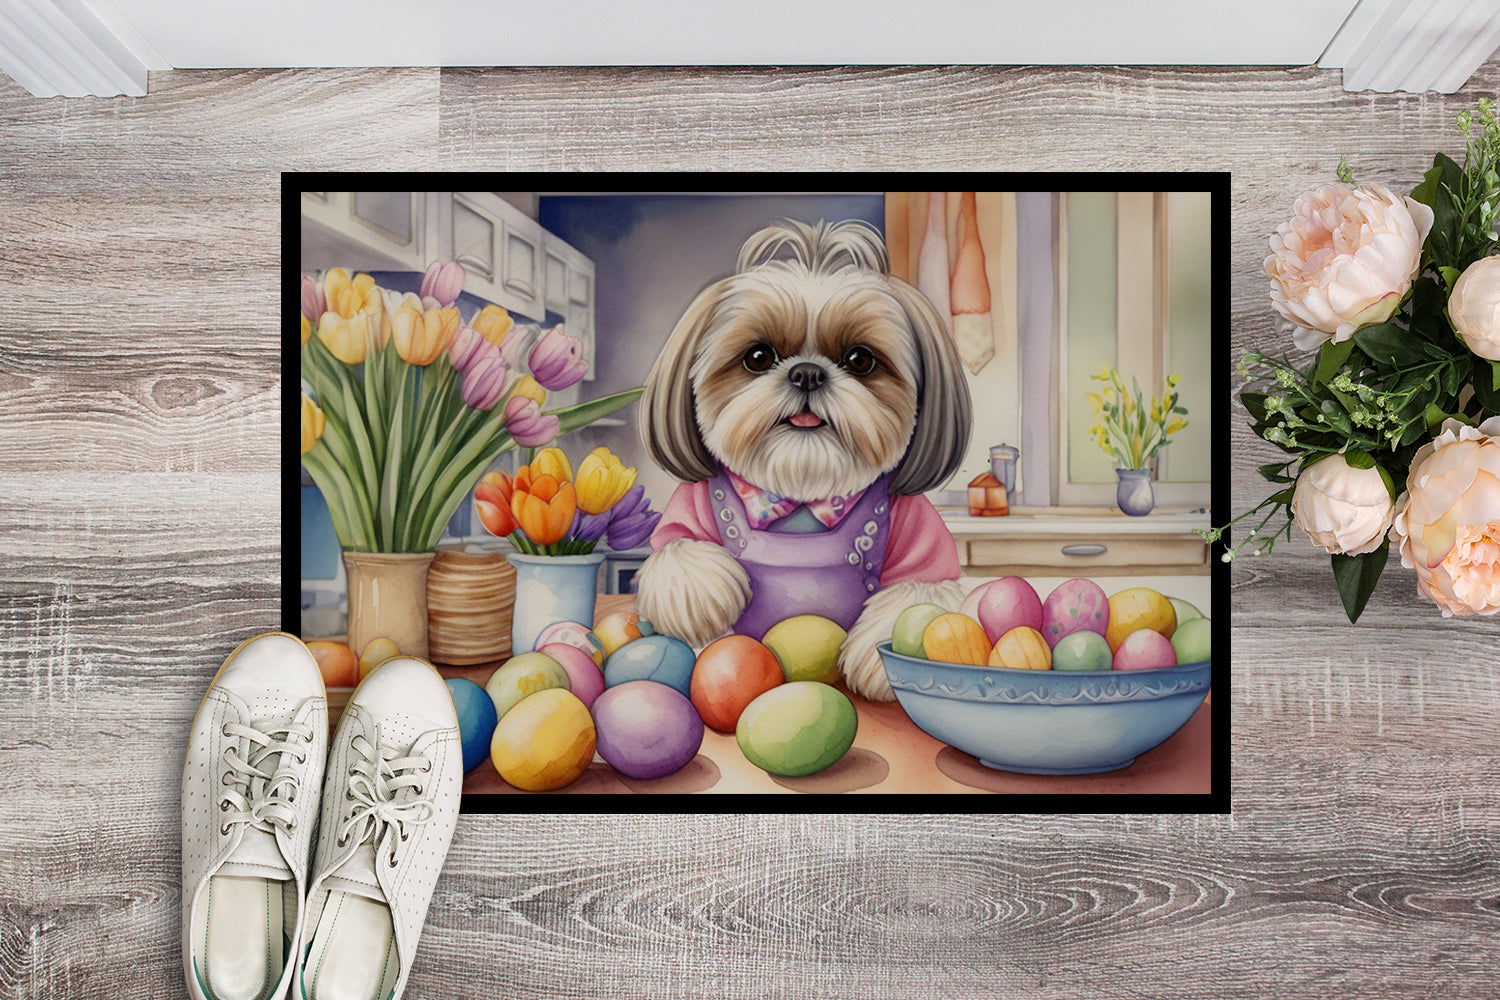 Buy this Decorating Easter Shih Tzu Doormat